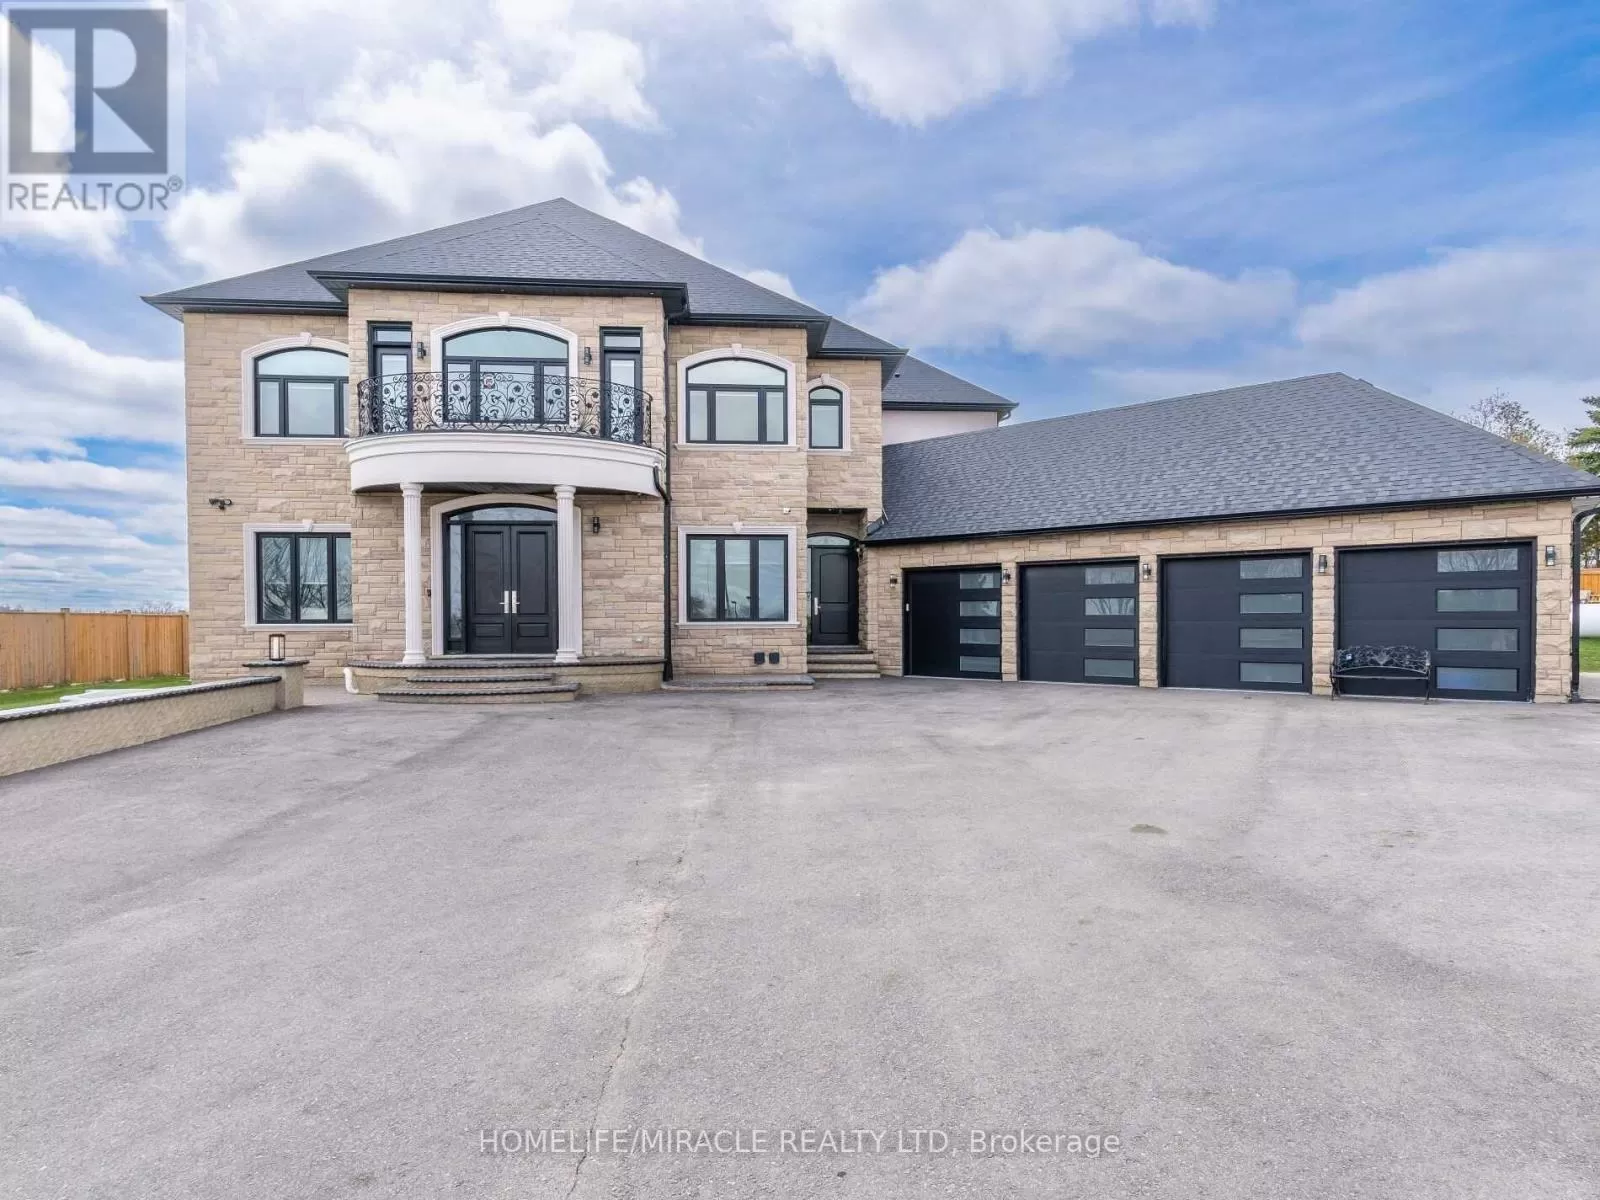 House for rent: 11086 Winston Churchill Boulevard, Halton Hills, Ontario L7G 4S7